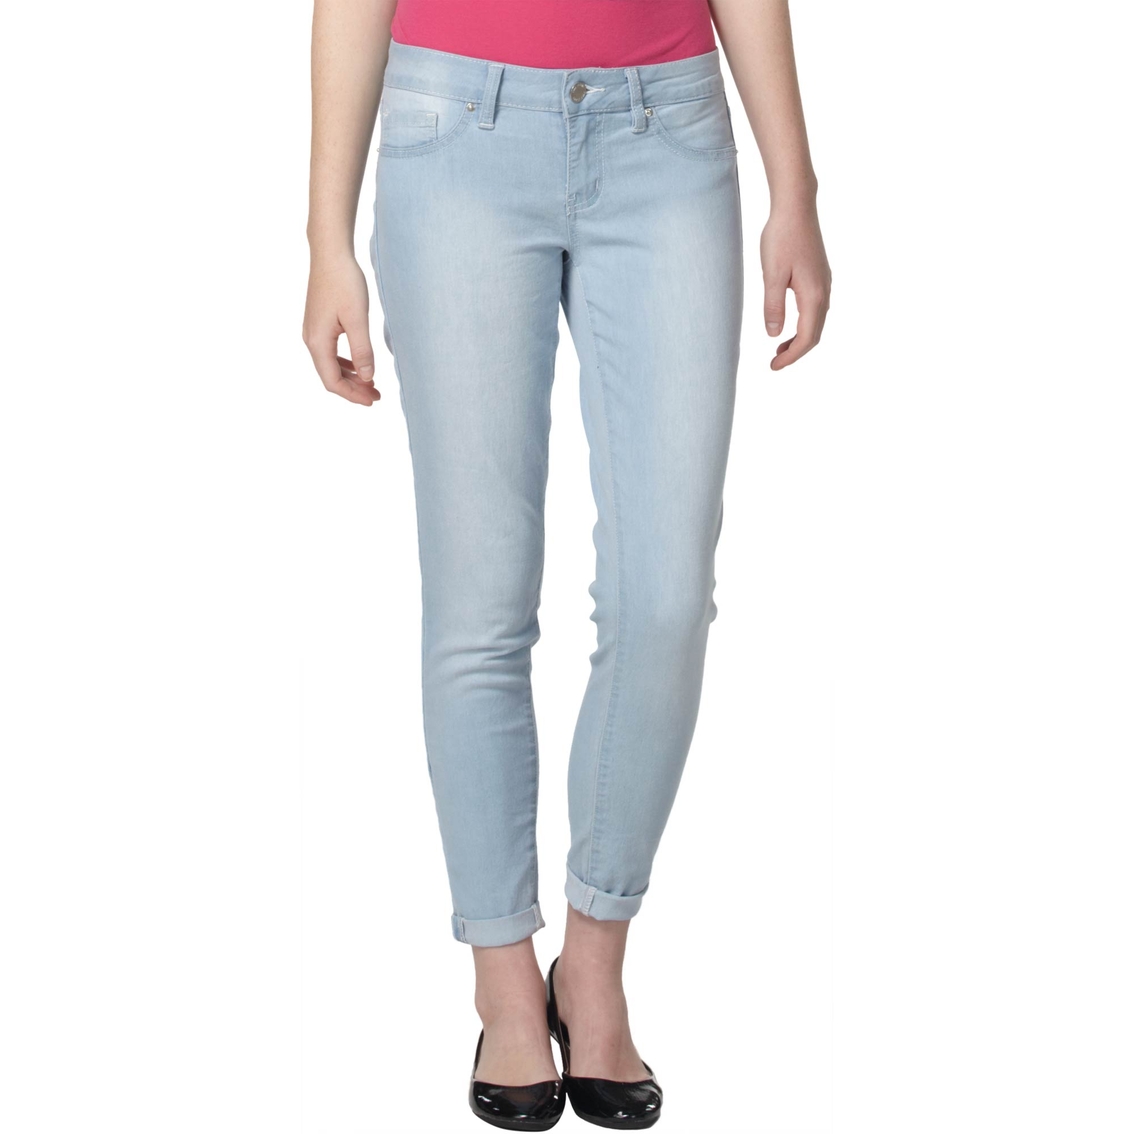 Ymi Jeans Skinny Anklet Jeans | Jeans & Pants | Apparel | Shop The Exchange